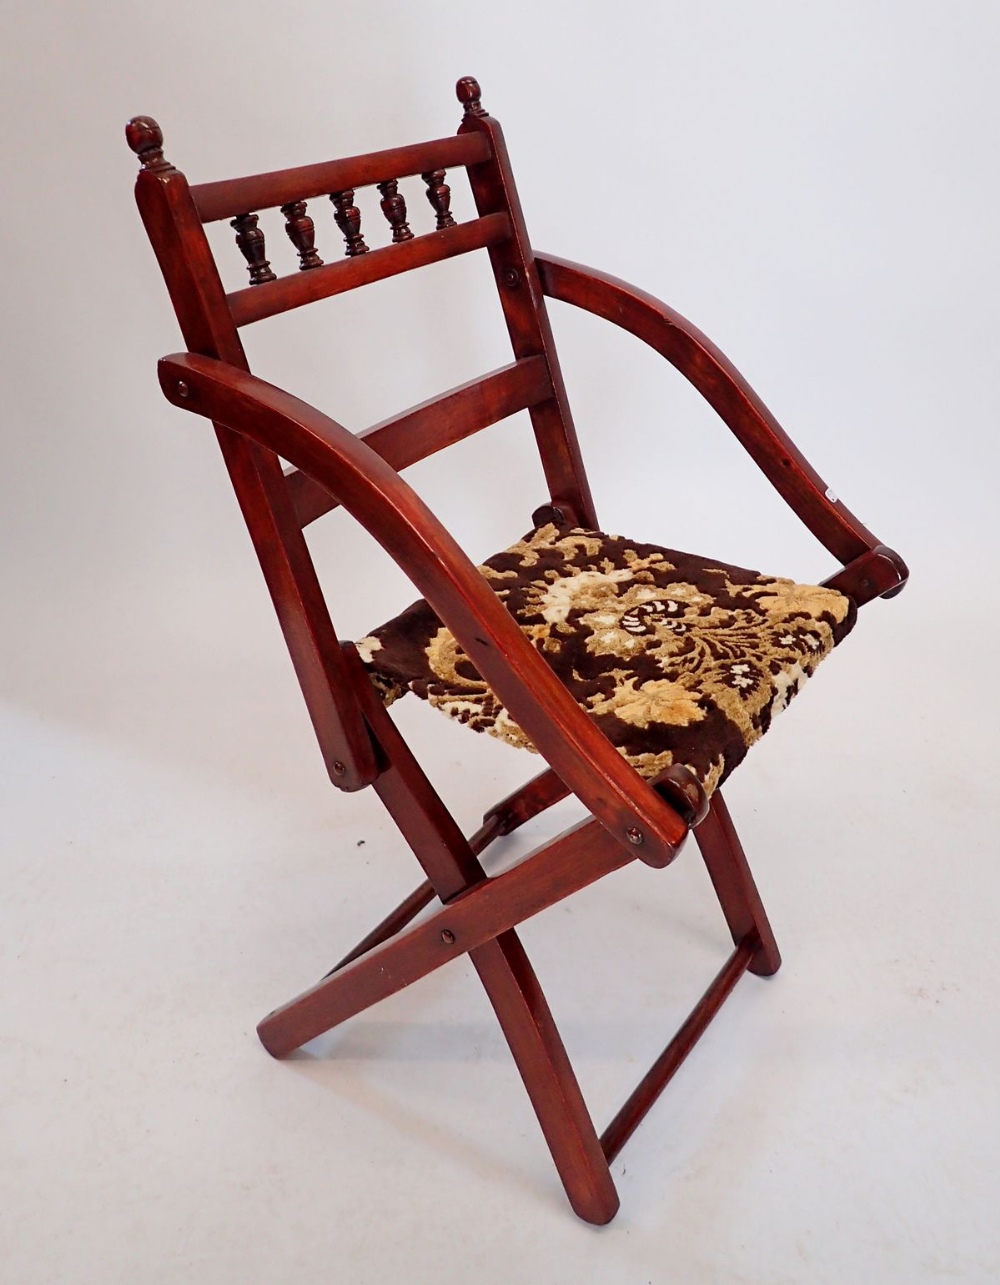 An Edwardian folding child's chair